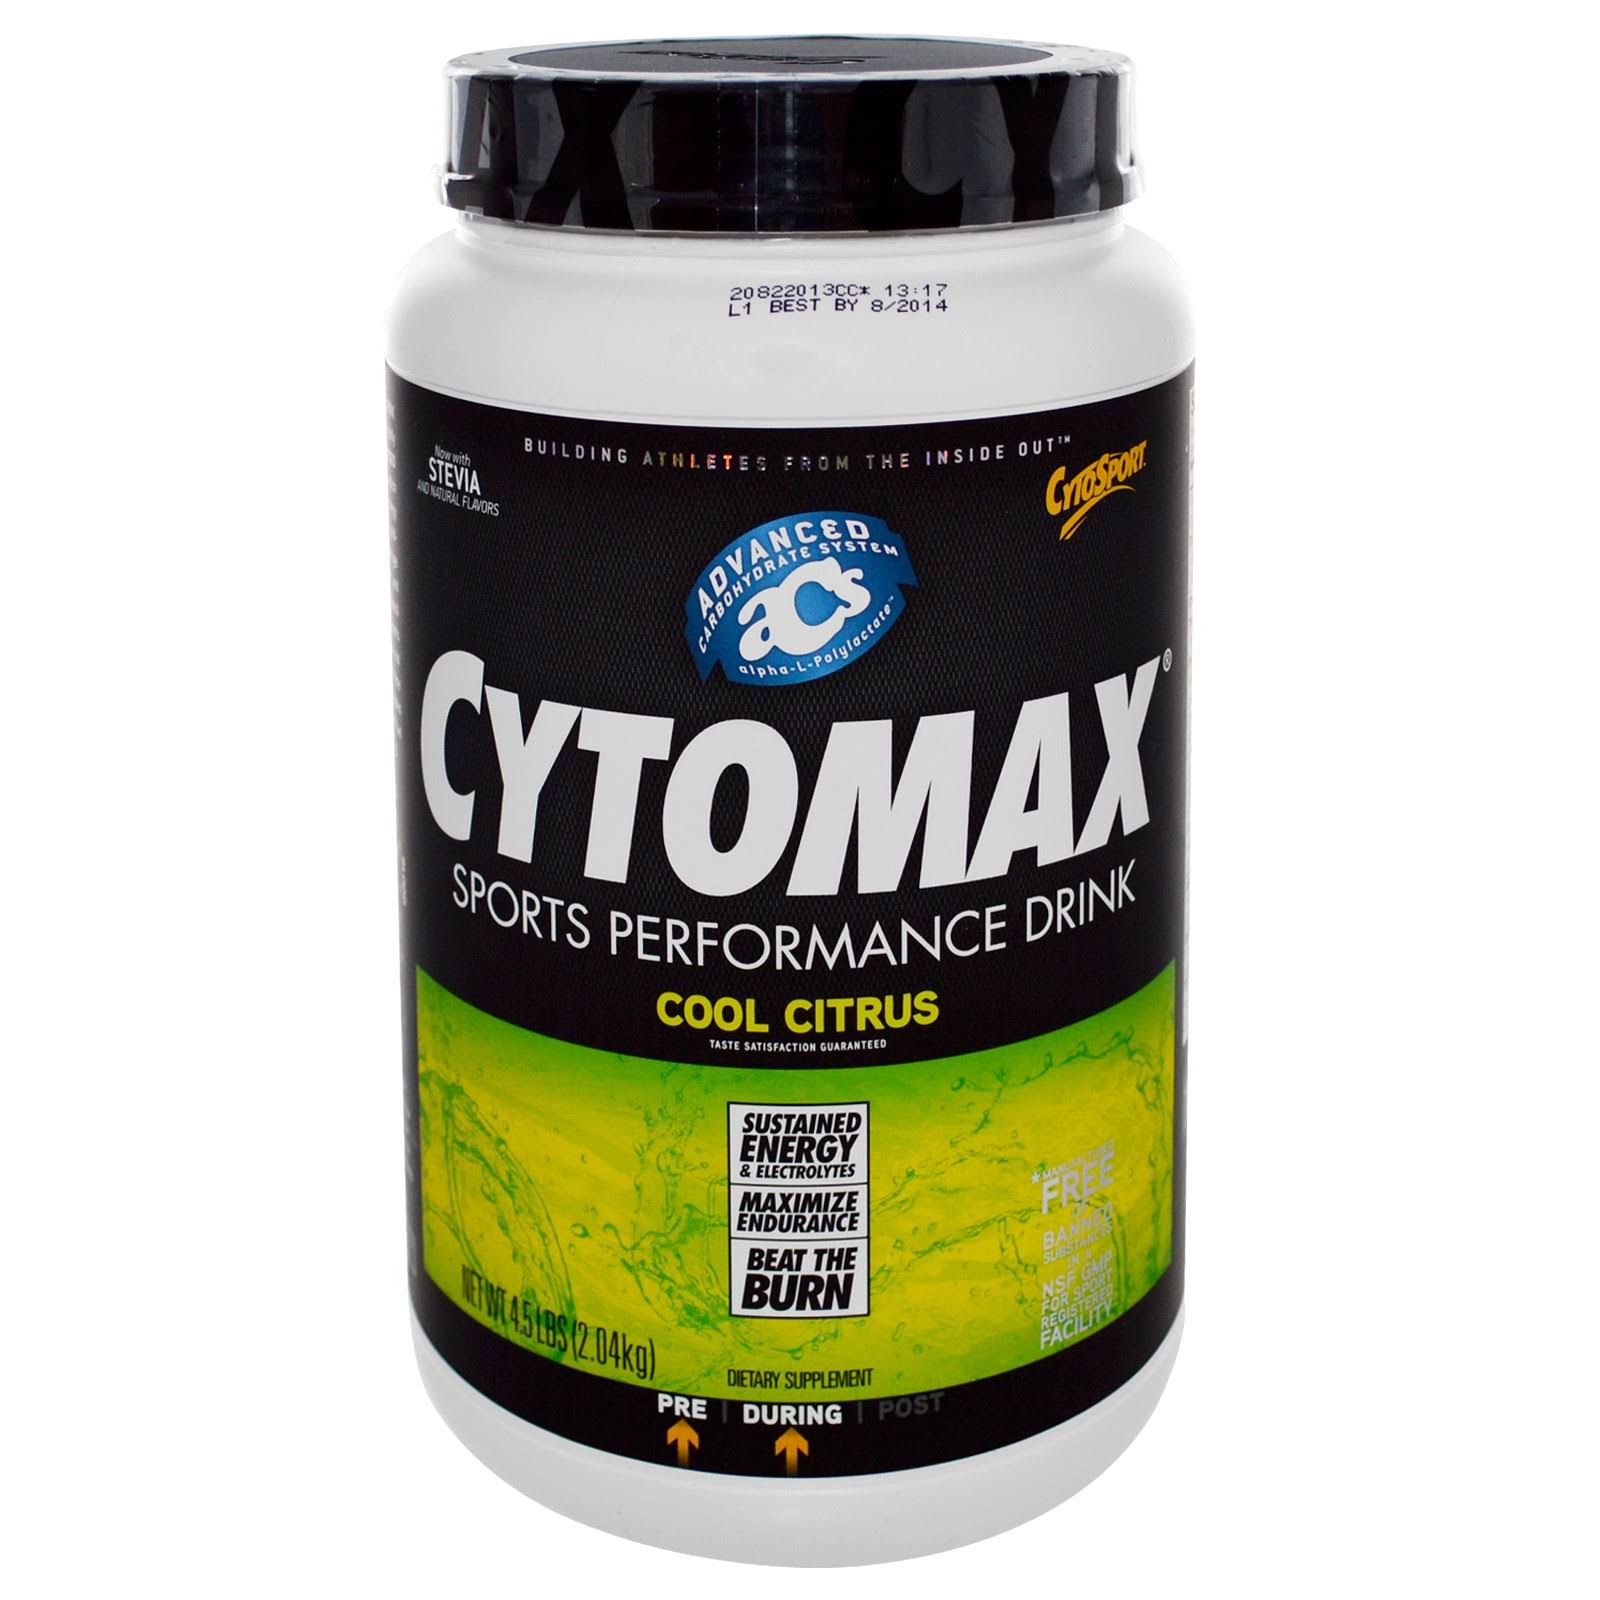 CytoSport Cytomax Cool Citrus Sports Performance Mix Dietary Supplement - 4.5lbs